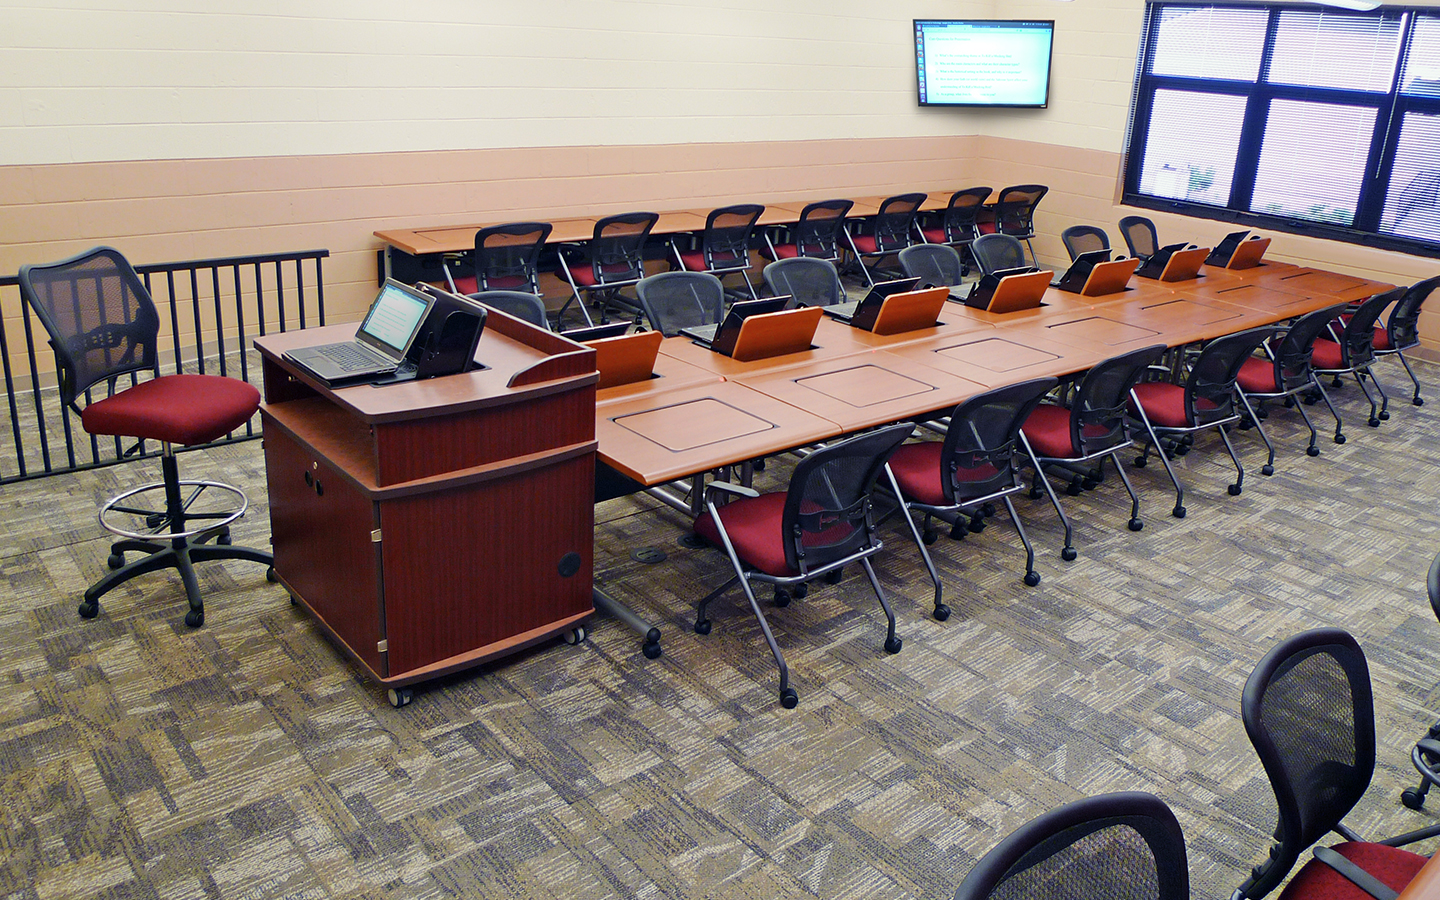 Enhance Your Classroom with Ergonomic Technology Desks from SMARTdesks Call 800-770-7042